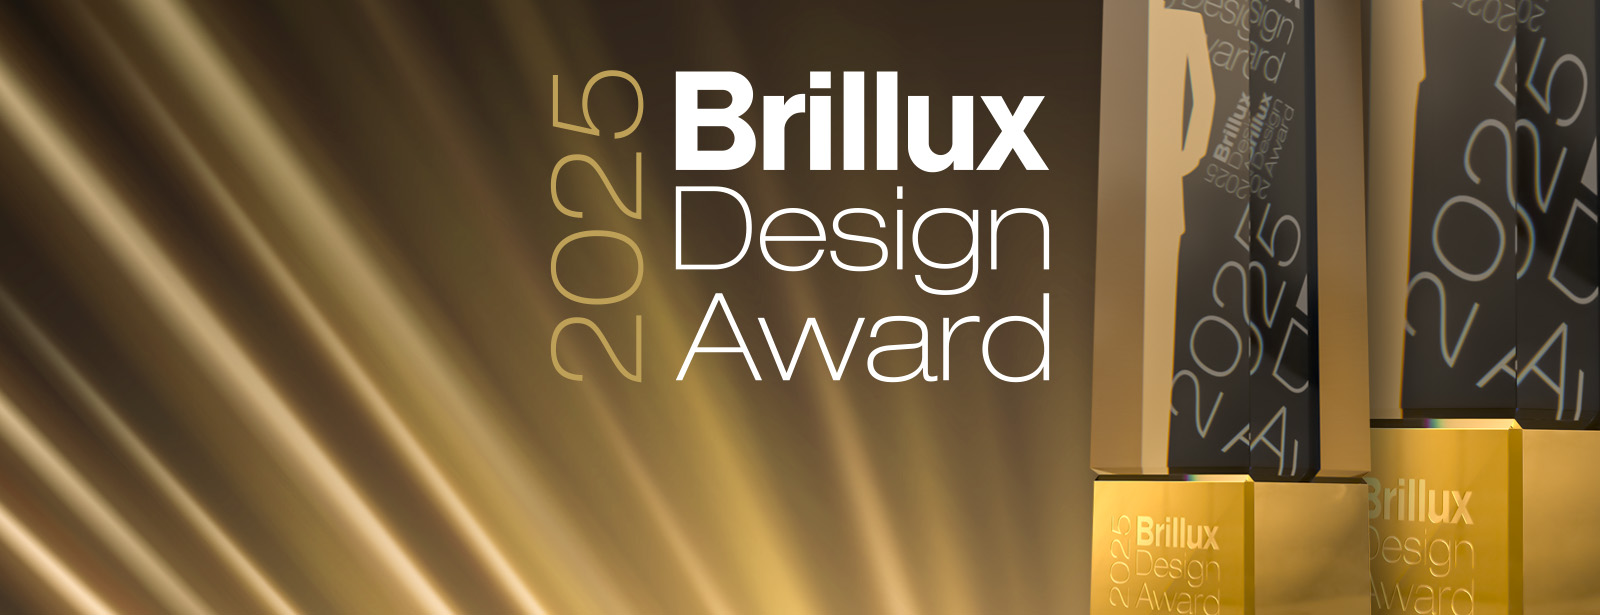 Brillux Design Award: Take part!